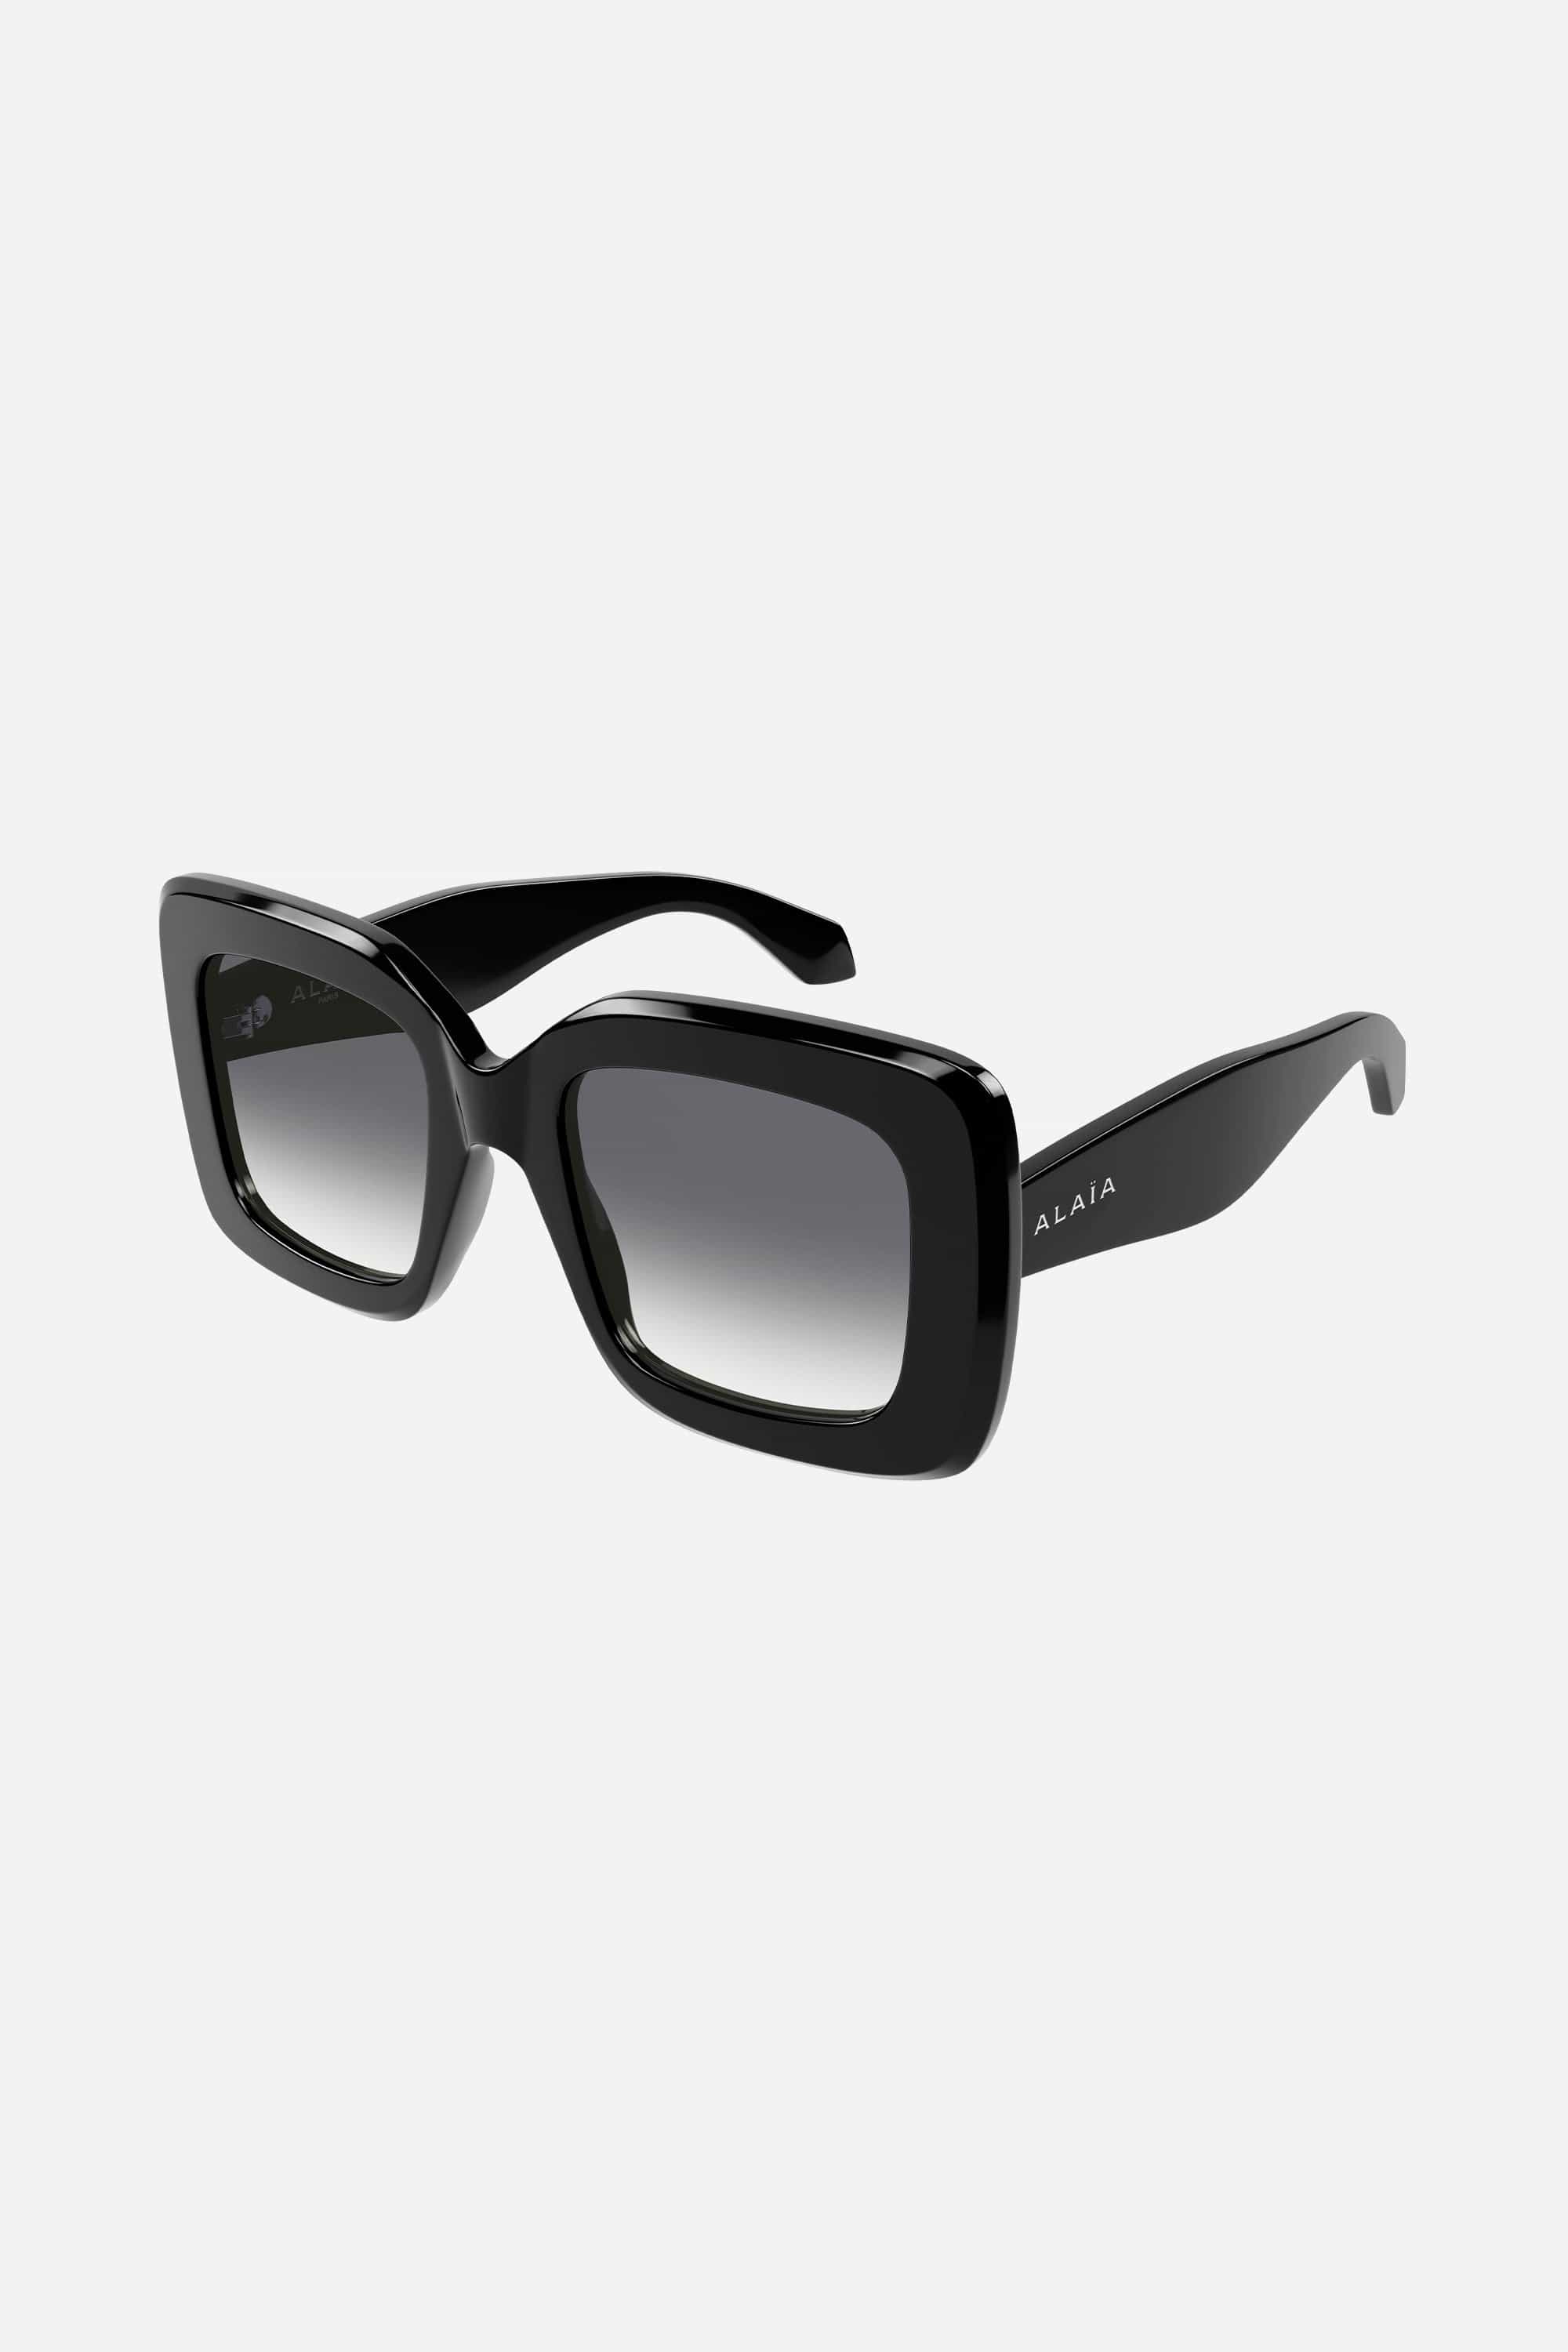 Alaia Black Squared Sunglasses - Eyewear Club